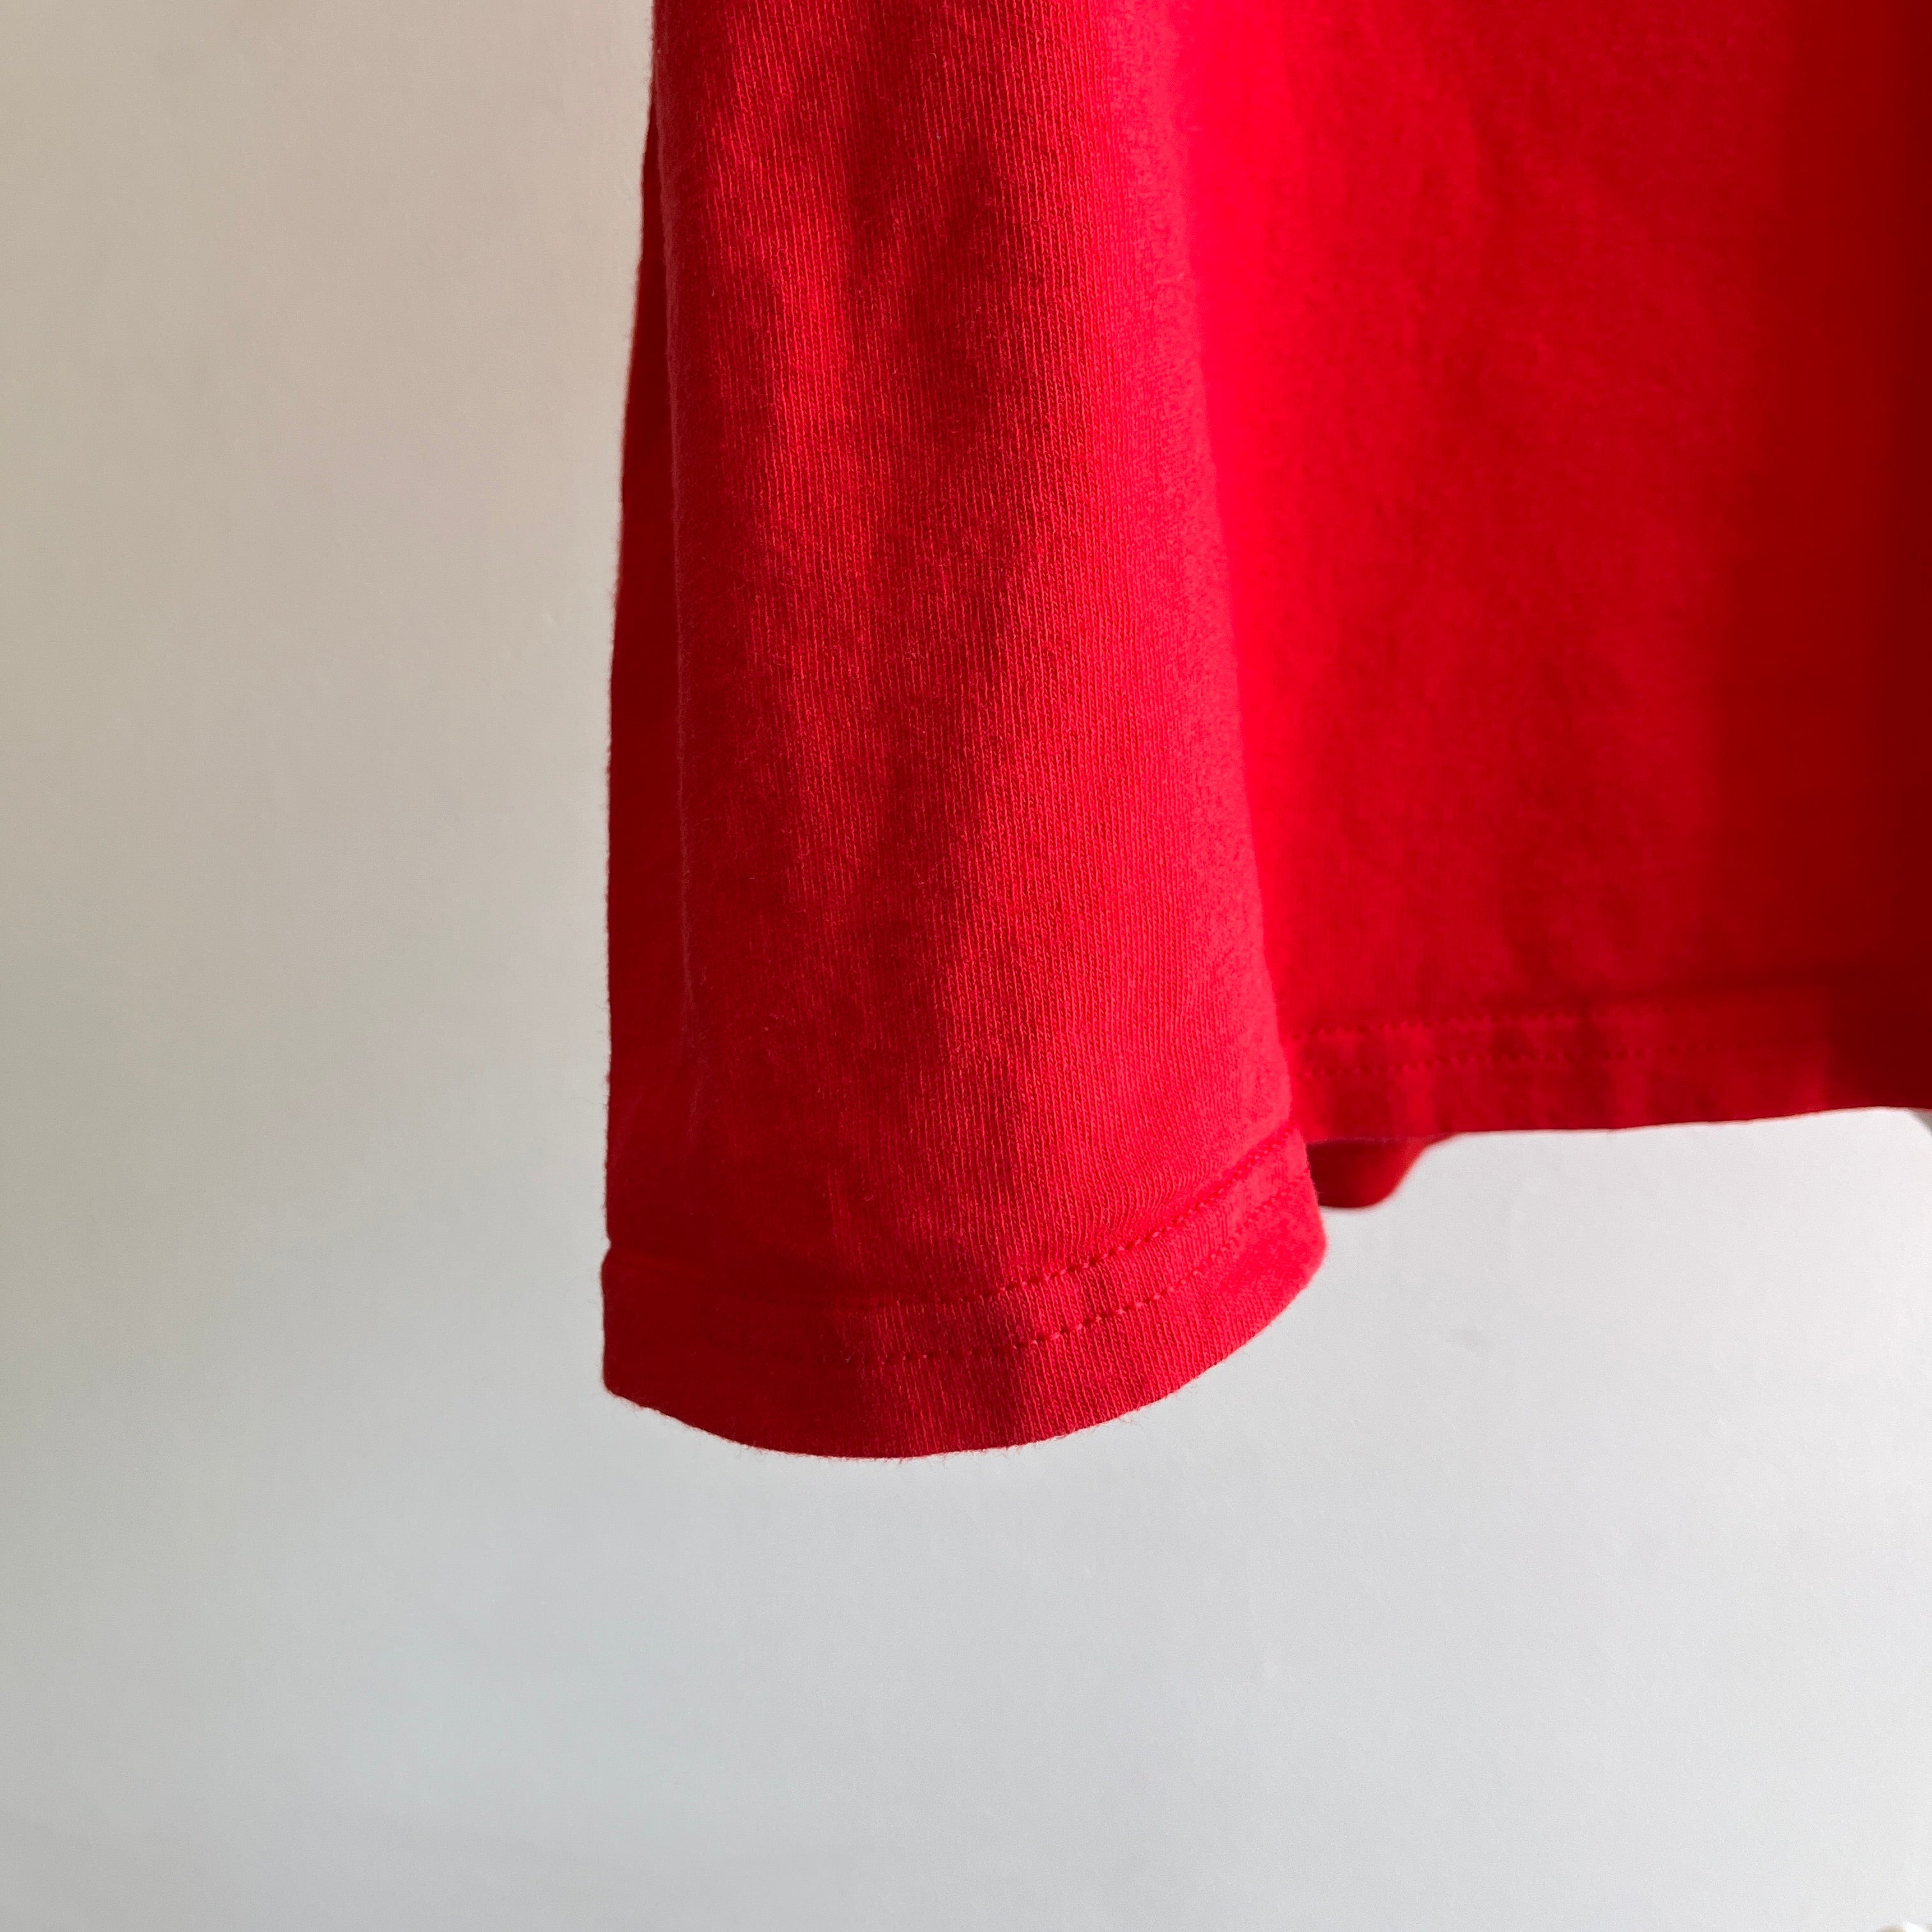 1990s Boxy Blank Red Pocket Cotton T-Shirt par Lee